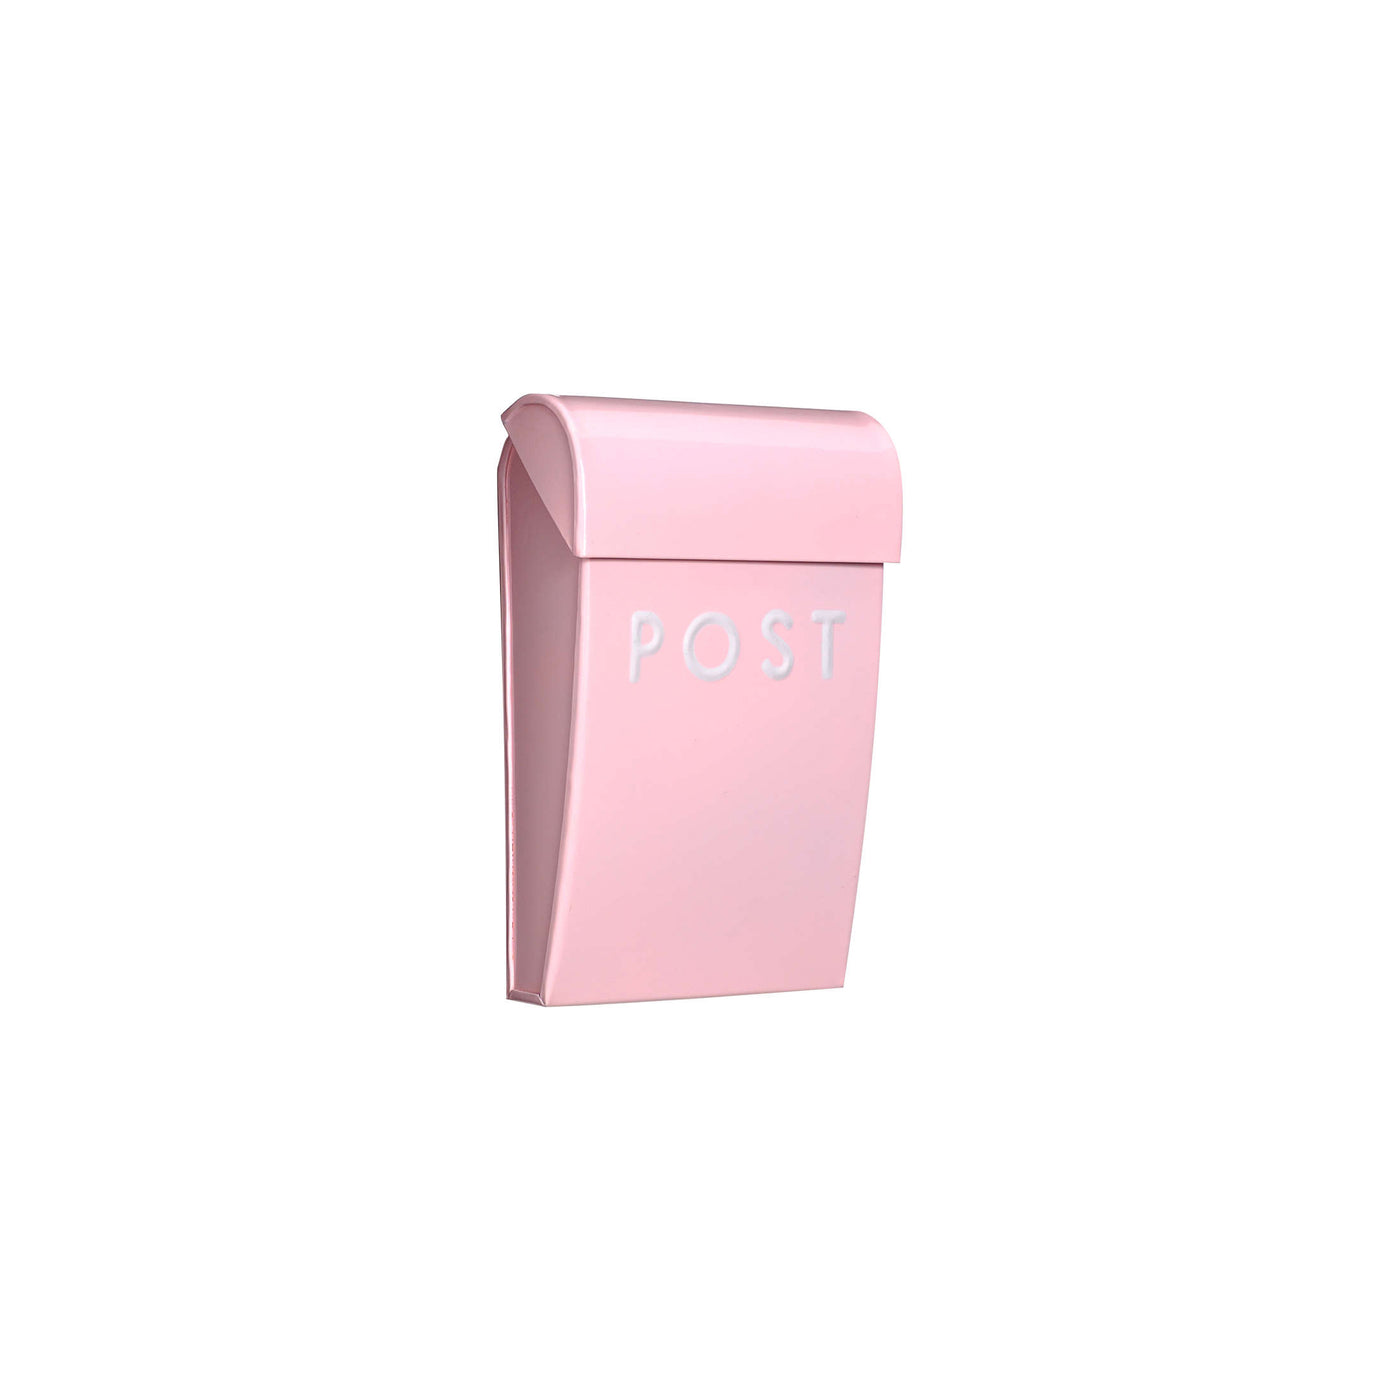 Postkasse micro, lyserød